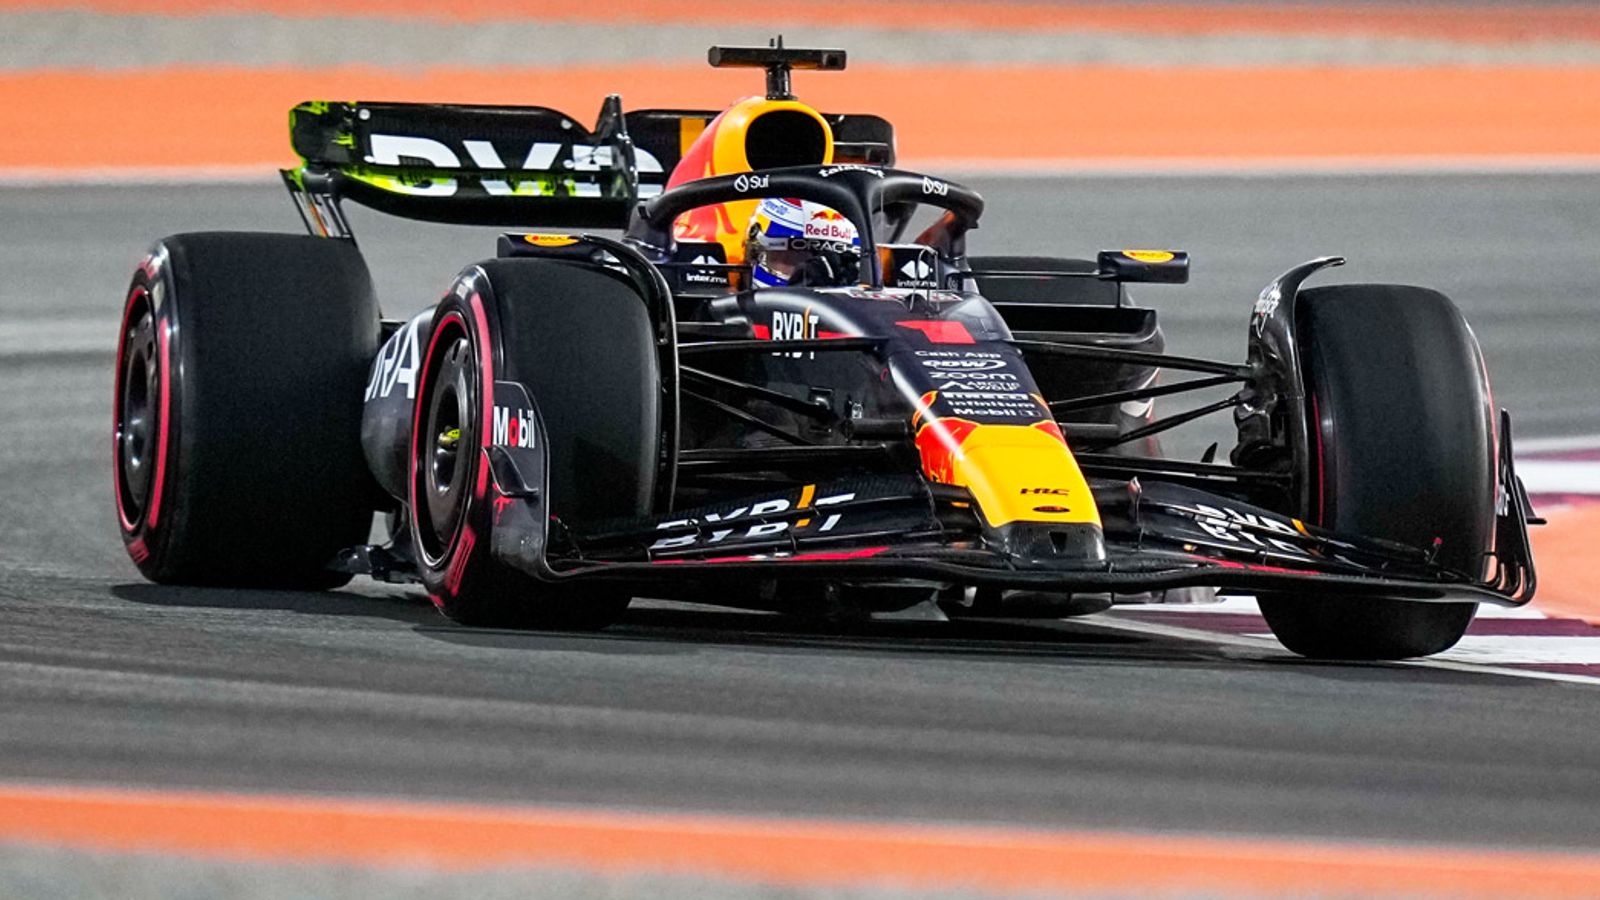 Formel 1 Max Verstappen rast auf Pole in Katar Formel 1 News Sky Sport